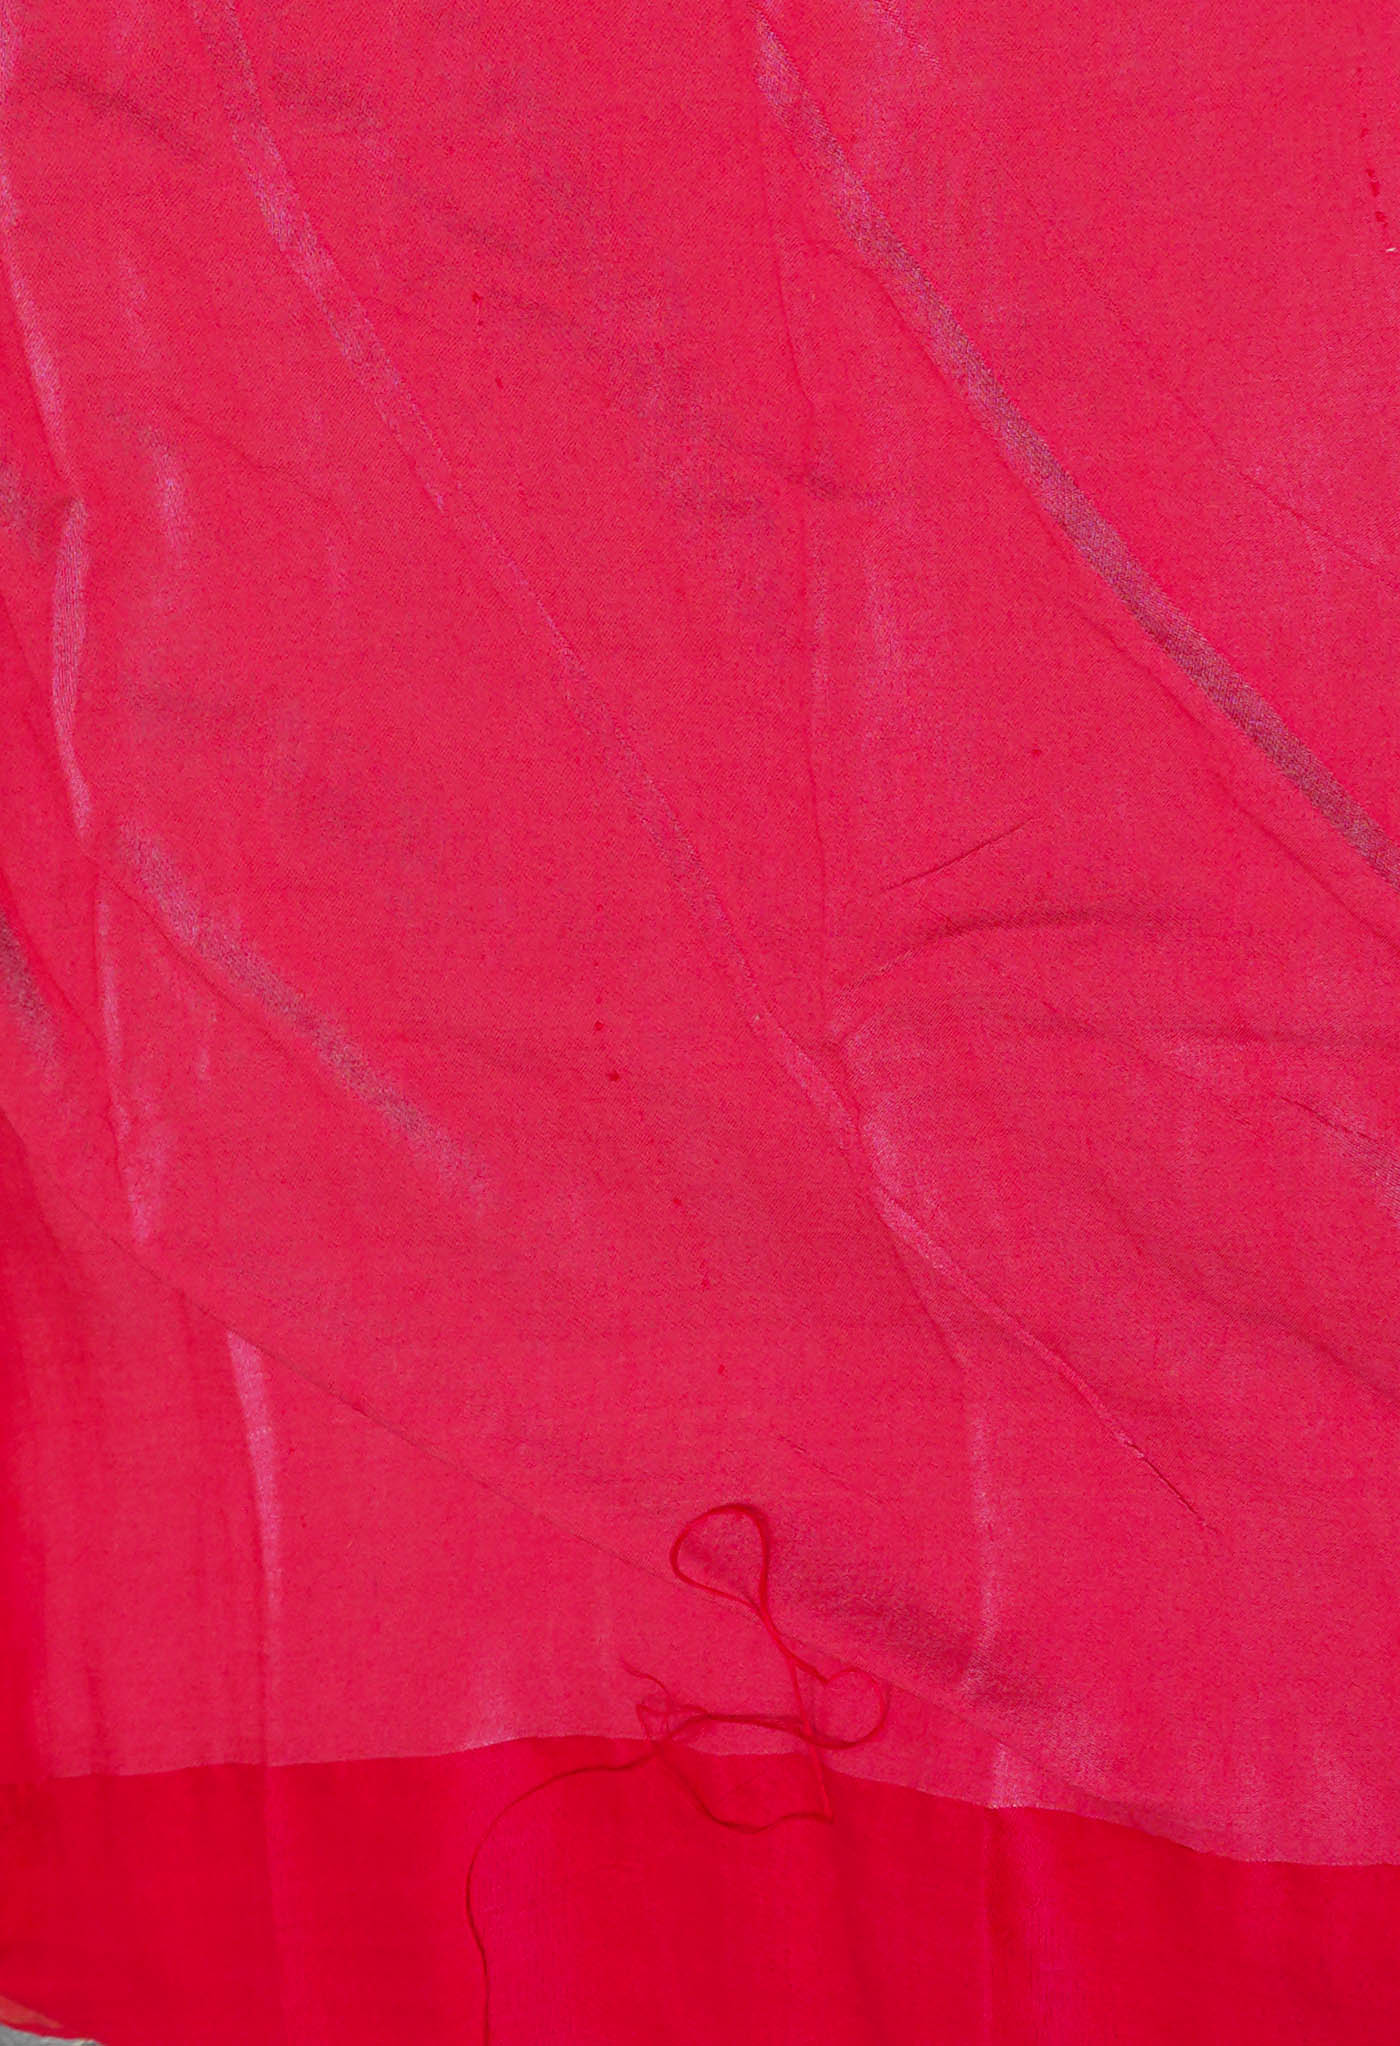 Pewter Grey Pure Handloom Kalamkari Printed Vidarbha Tussar Jute Saree-UNM72449